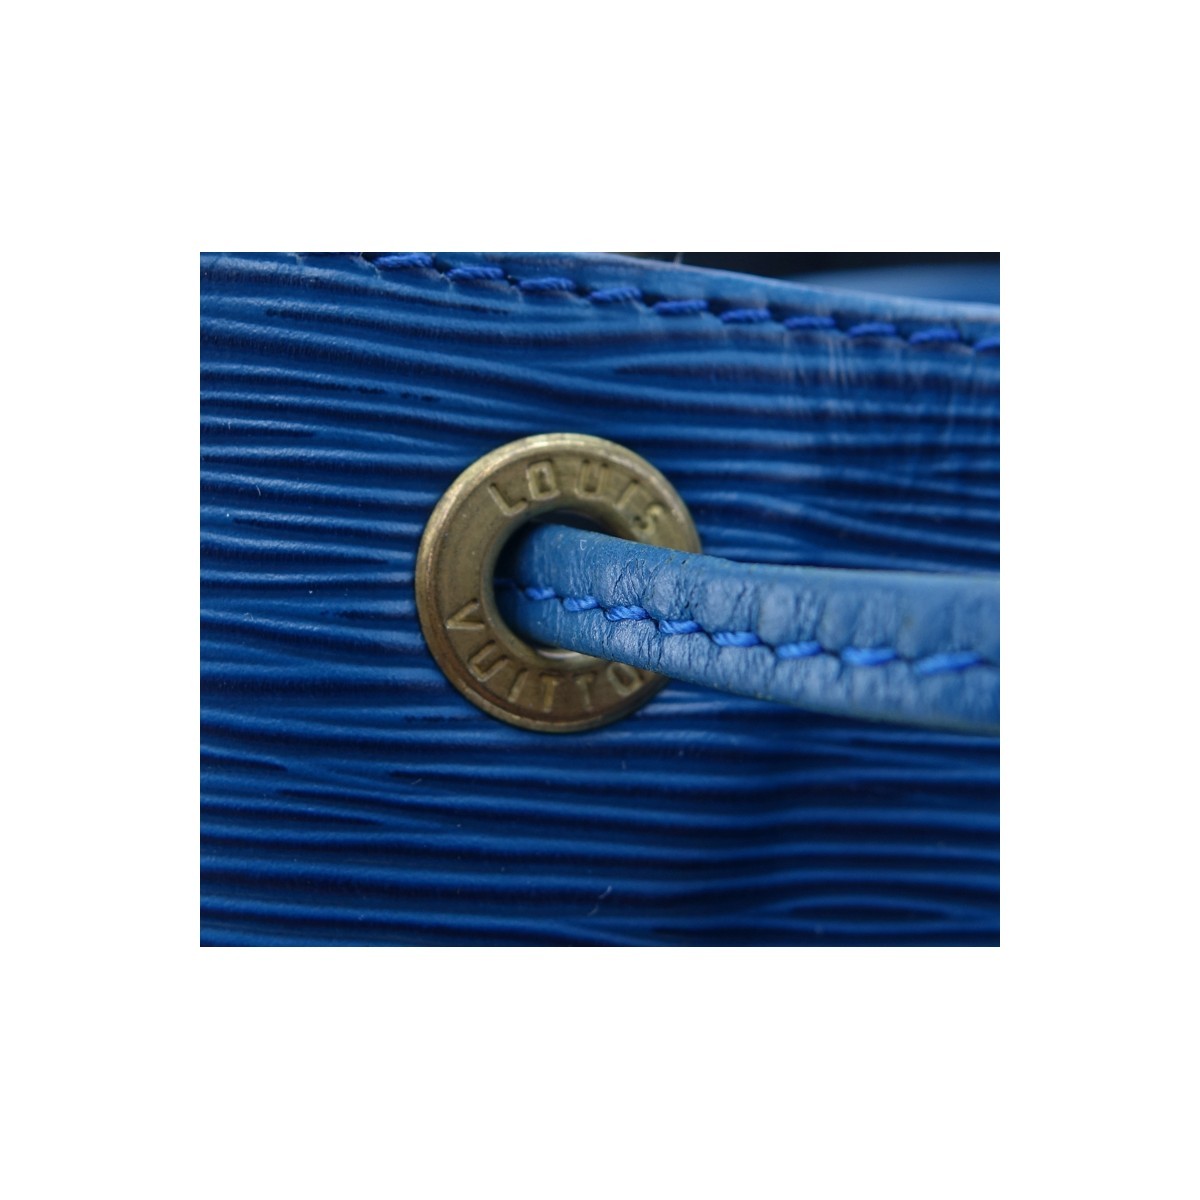 Louis Vuitton Blue Epi Leather Noe GM Bag. Golden brass hardware, black suede interior.